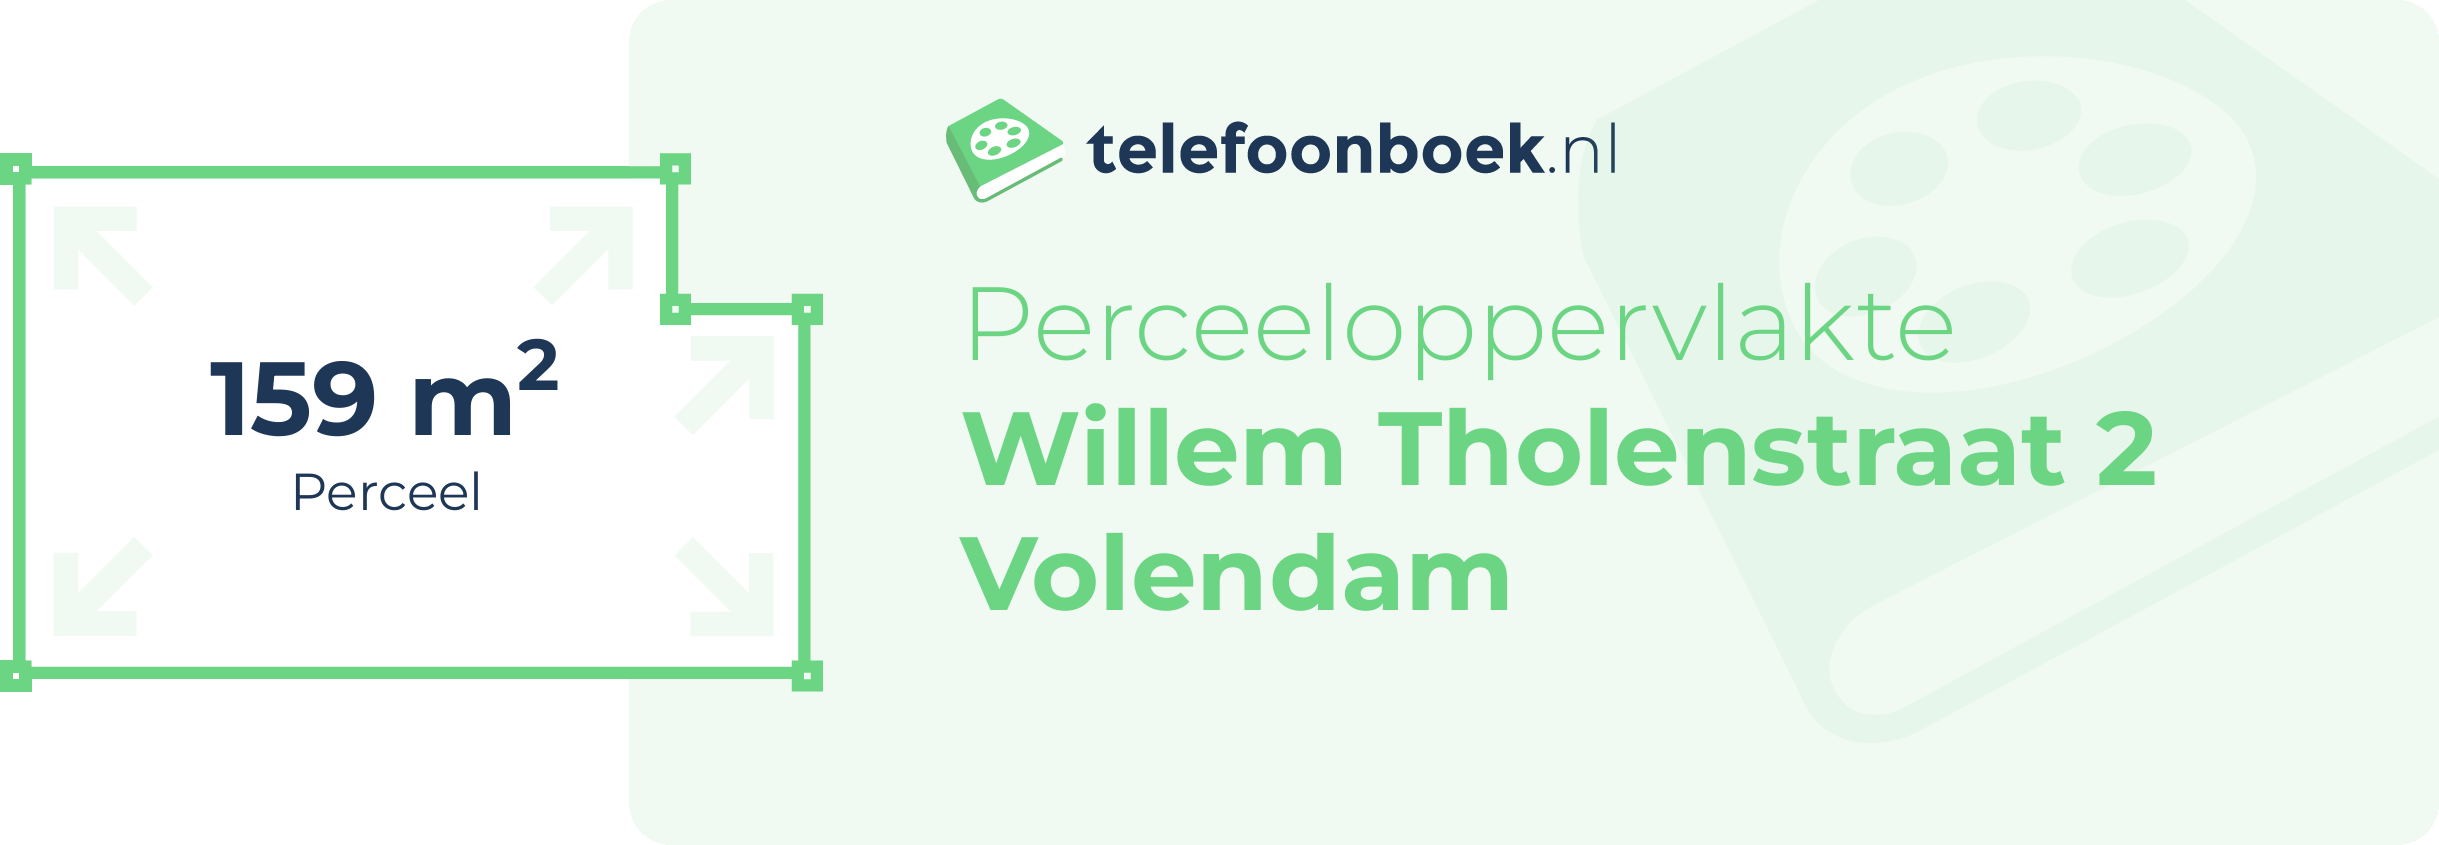 Perceeloppervlakte Willem Tholenstraat 2 Volendam